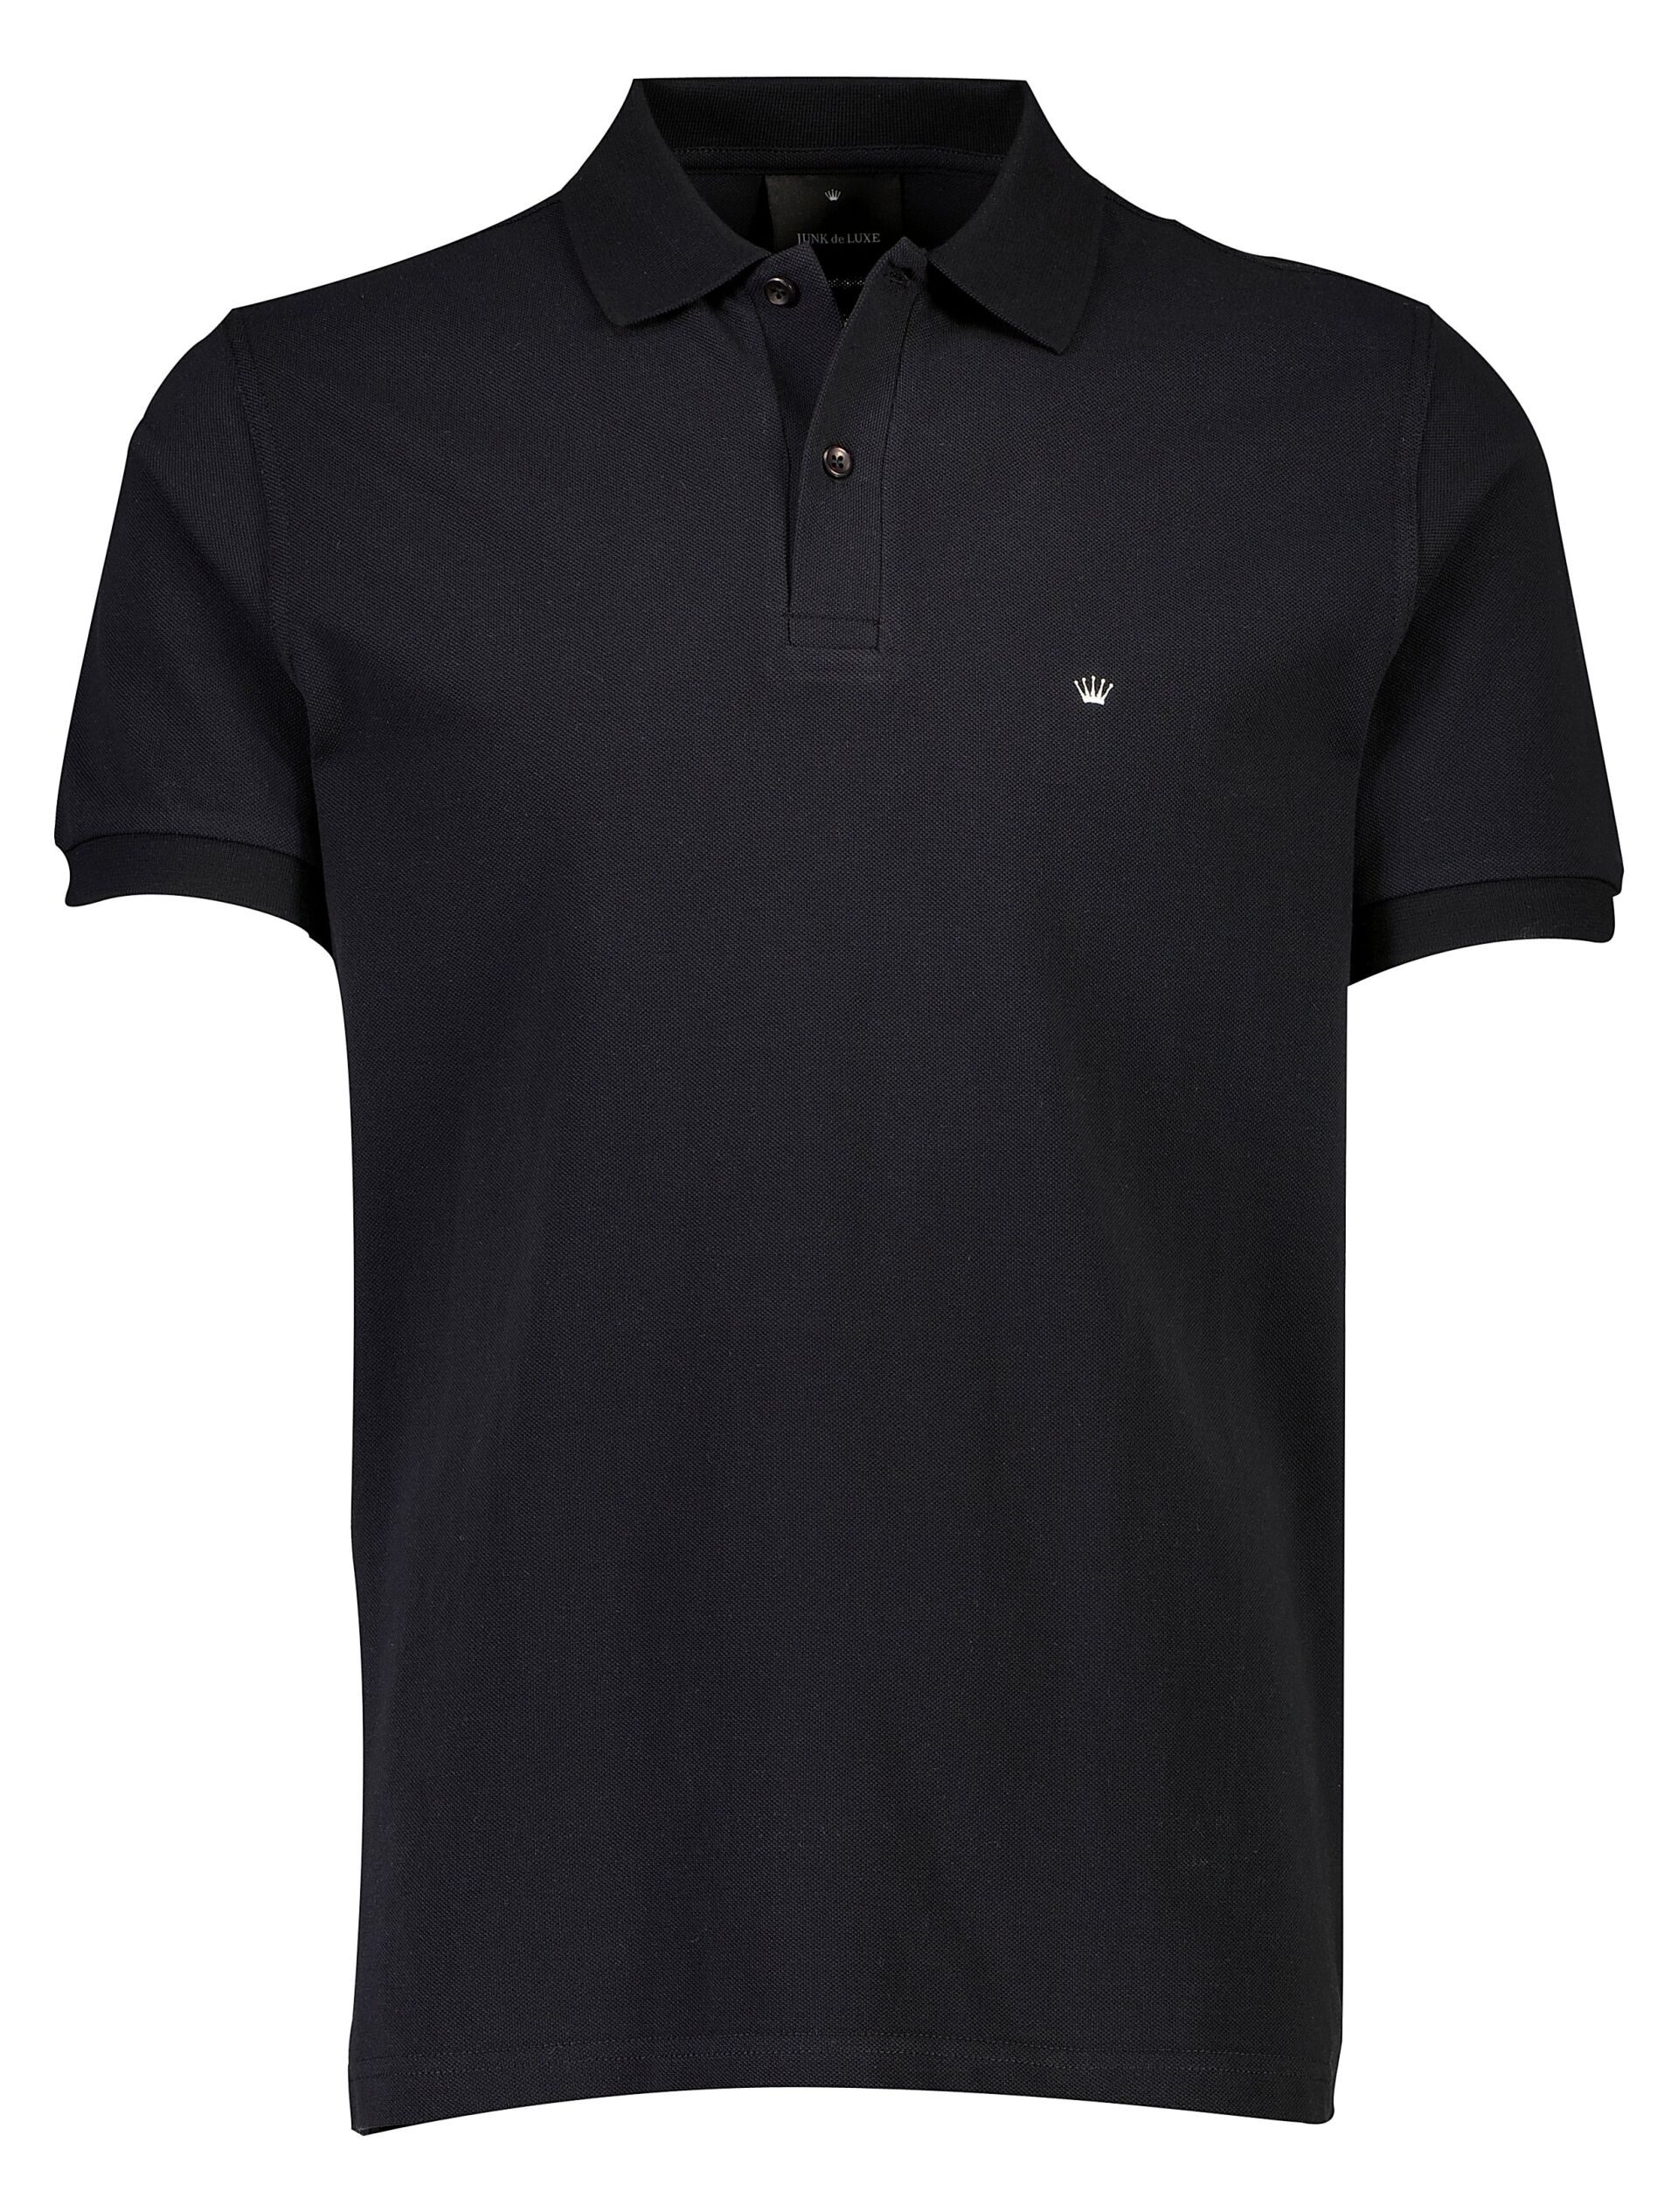 Polo shirt Polo shirt Black 60-452045